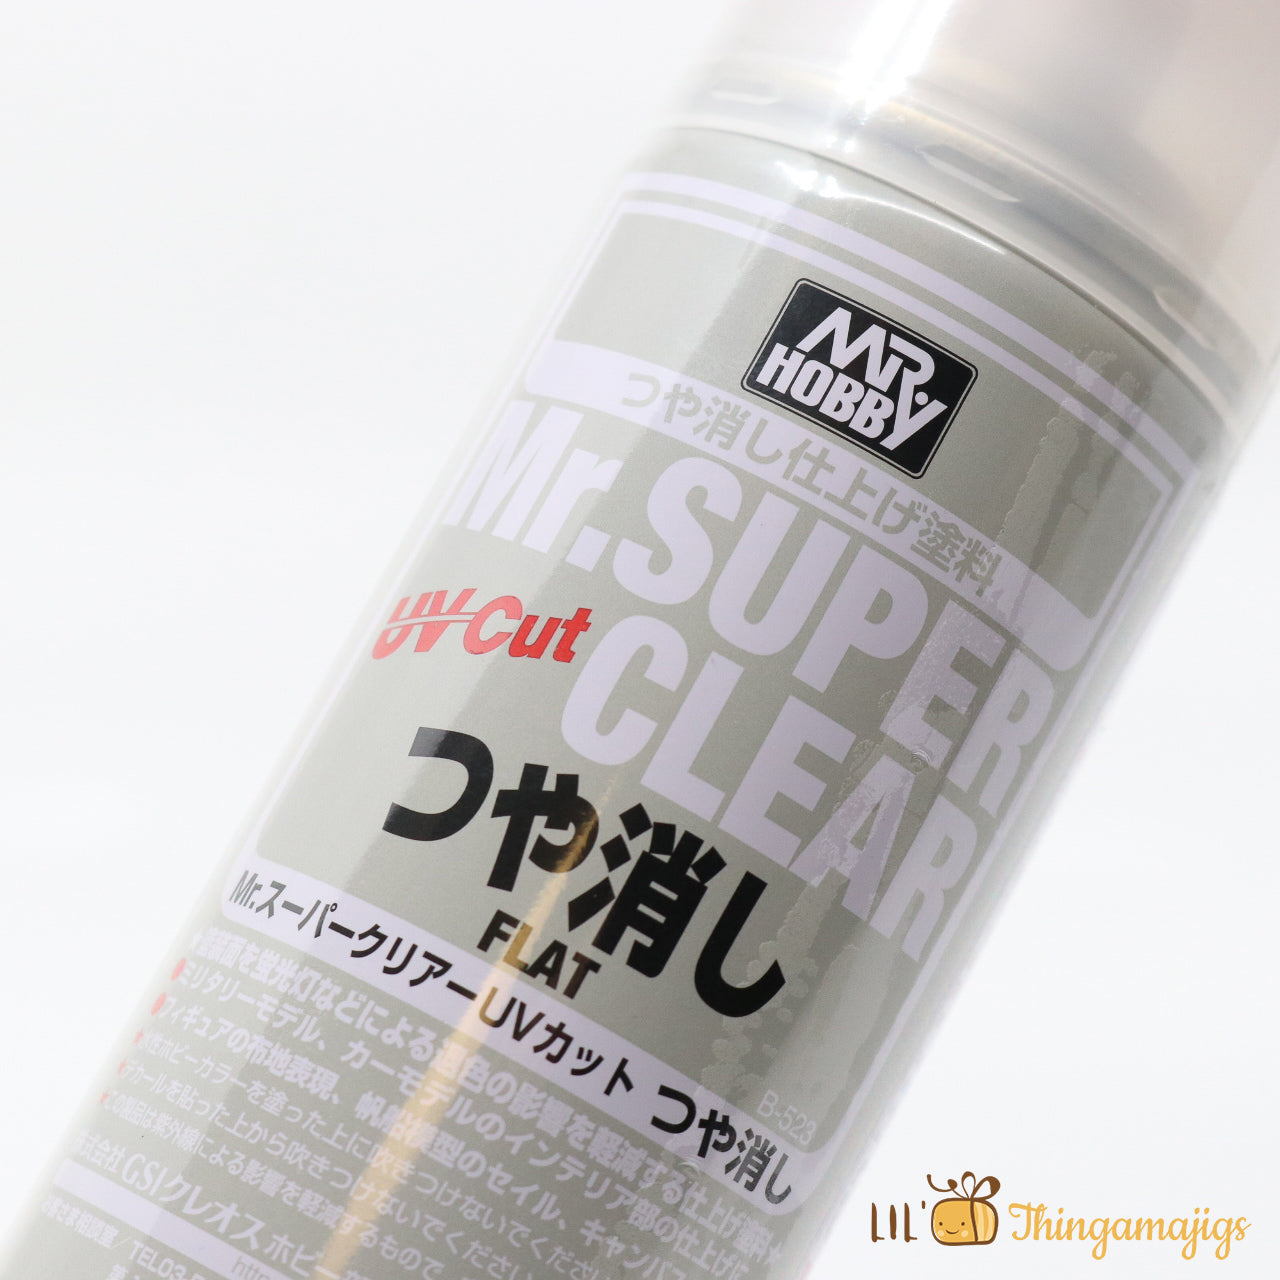 Mr. Hobby Mr. Super Clear UV-Cut (Flat)